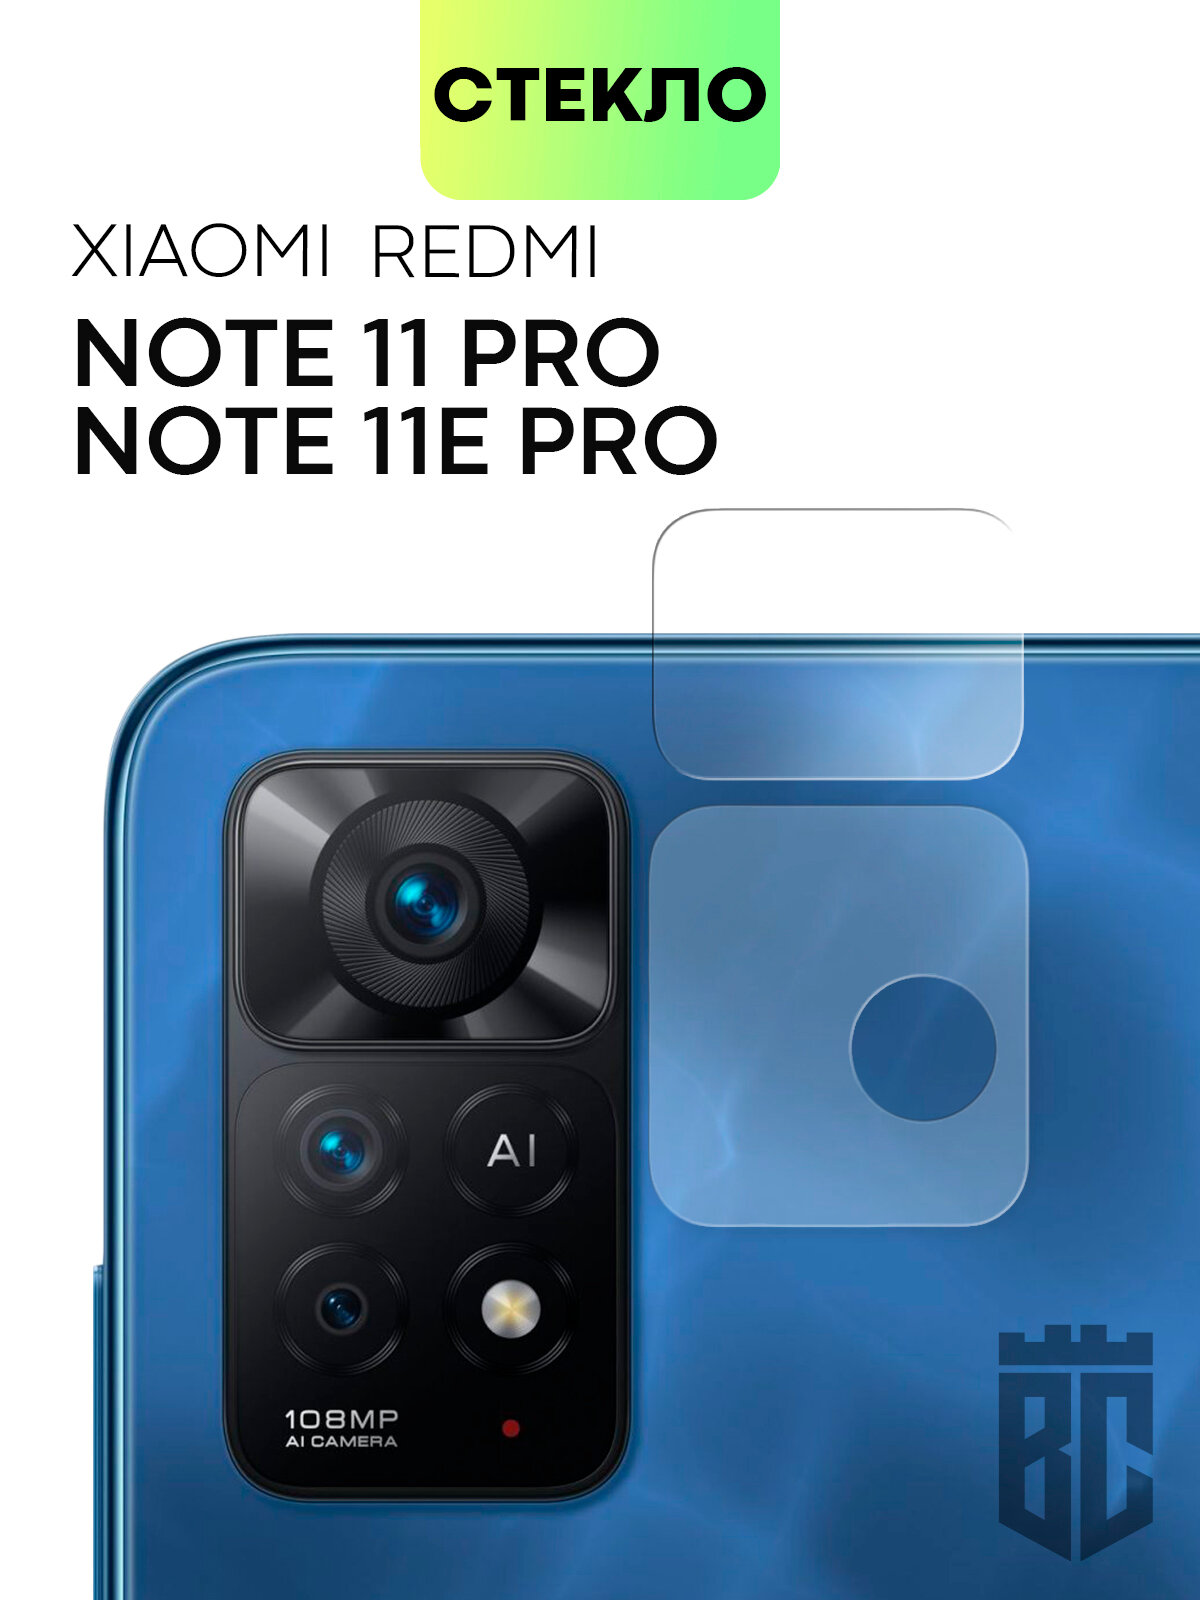 Защита камеры, Xiaomi Redmi Note 11 Pro, Note 11E Pro, защитное стекло на камеру, BROSCORP, прозрачное стекло